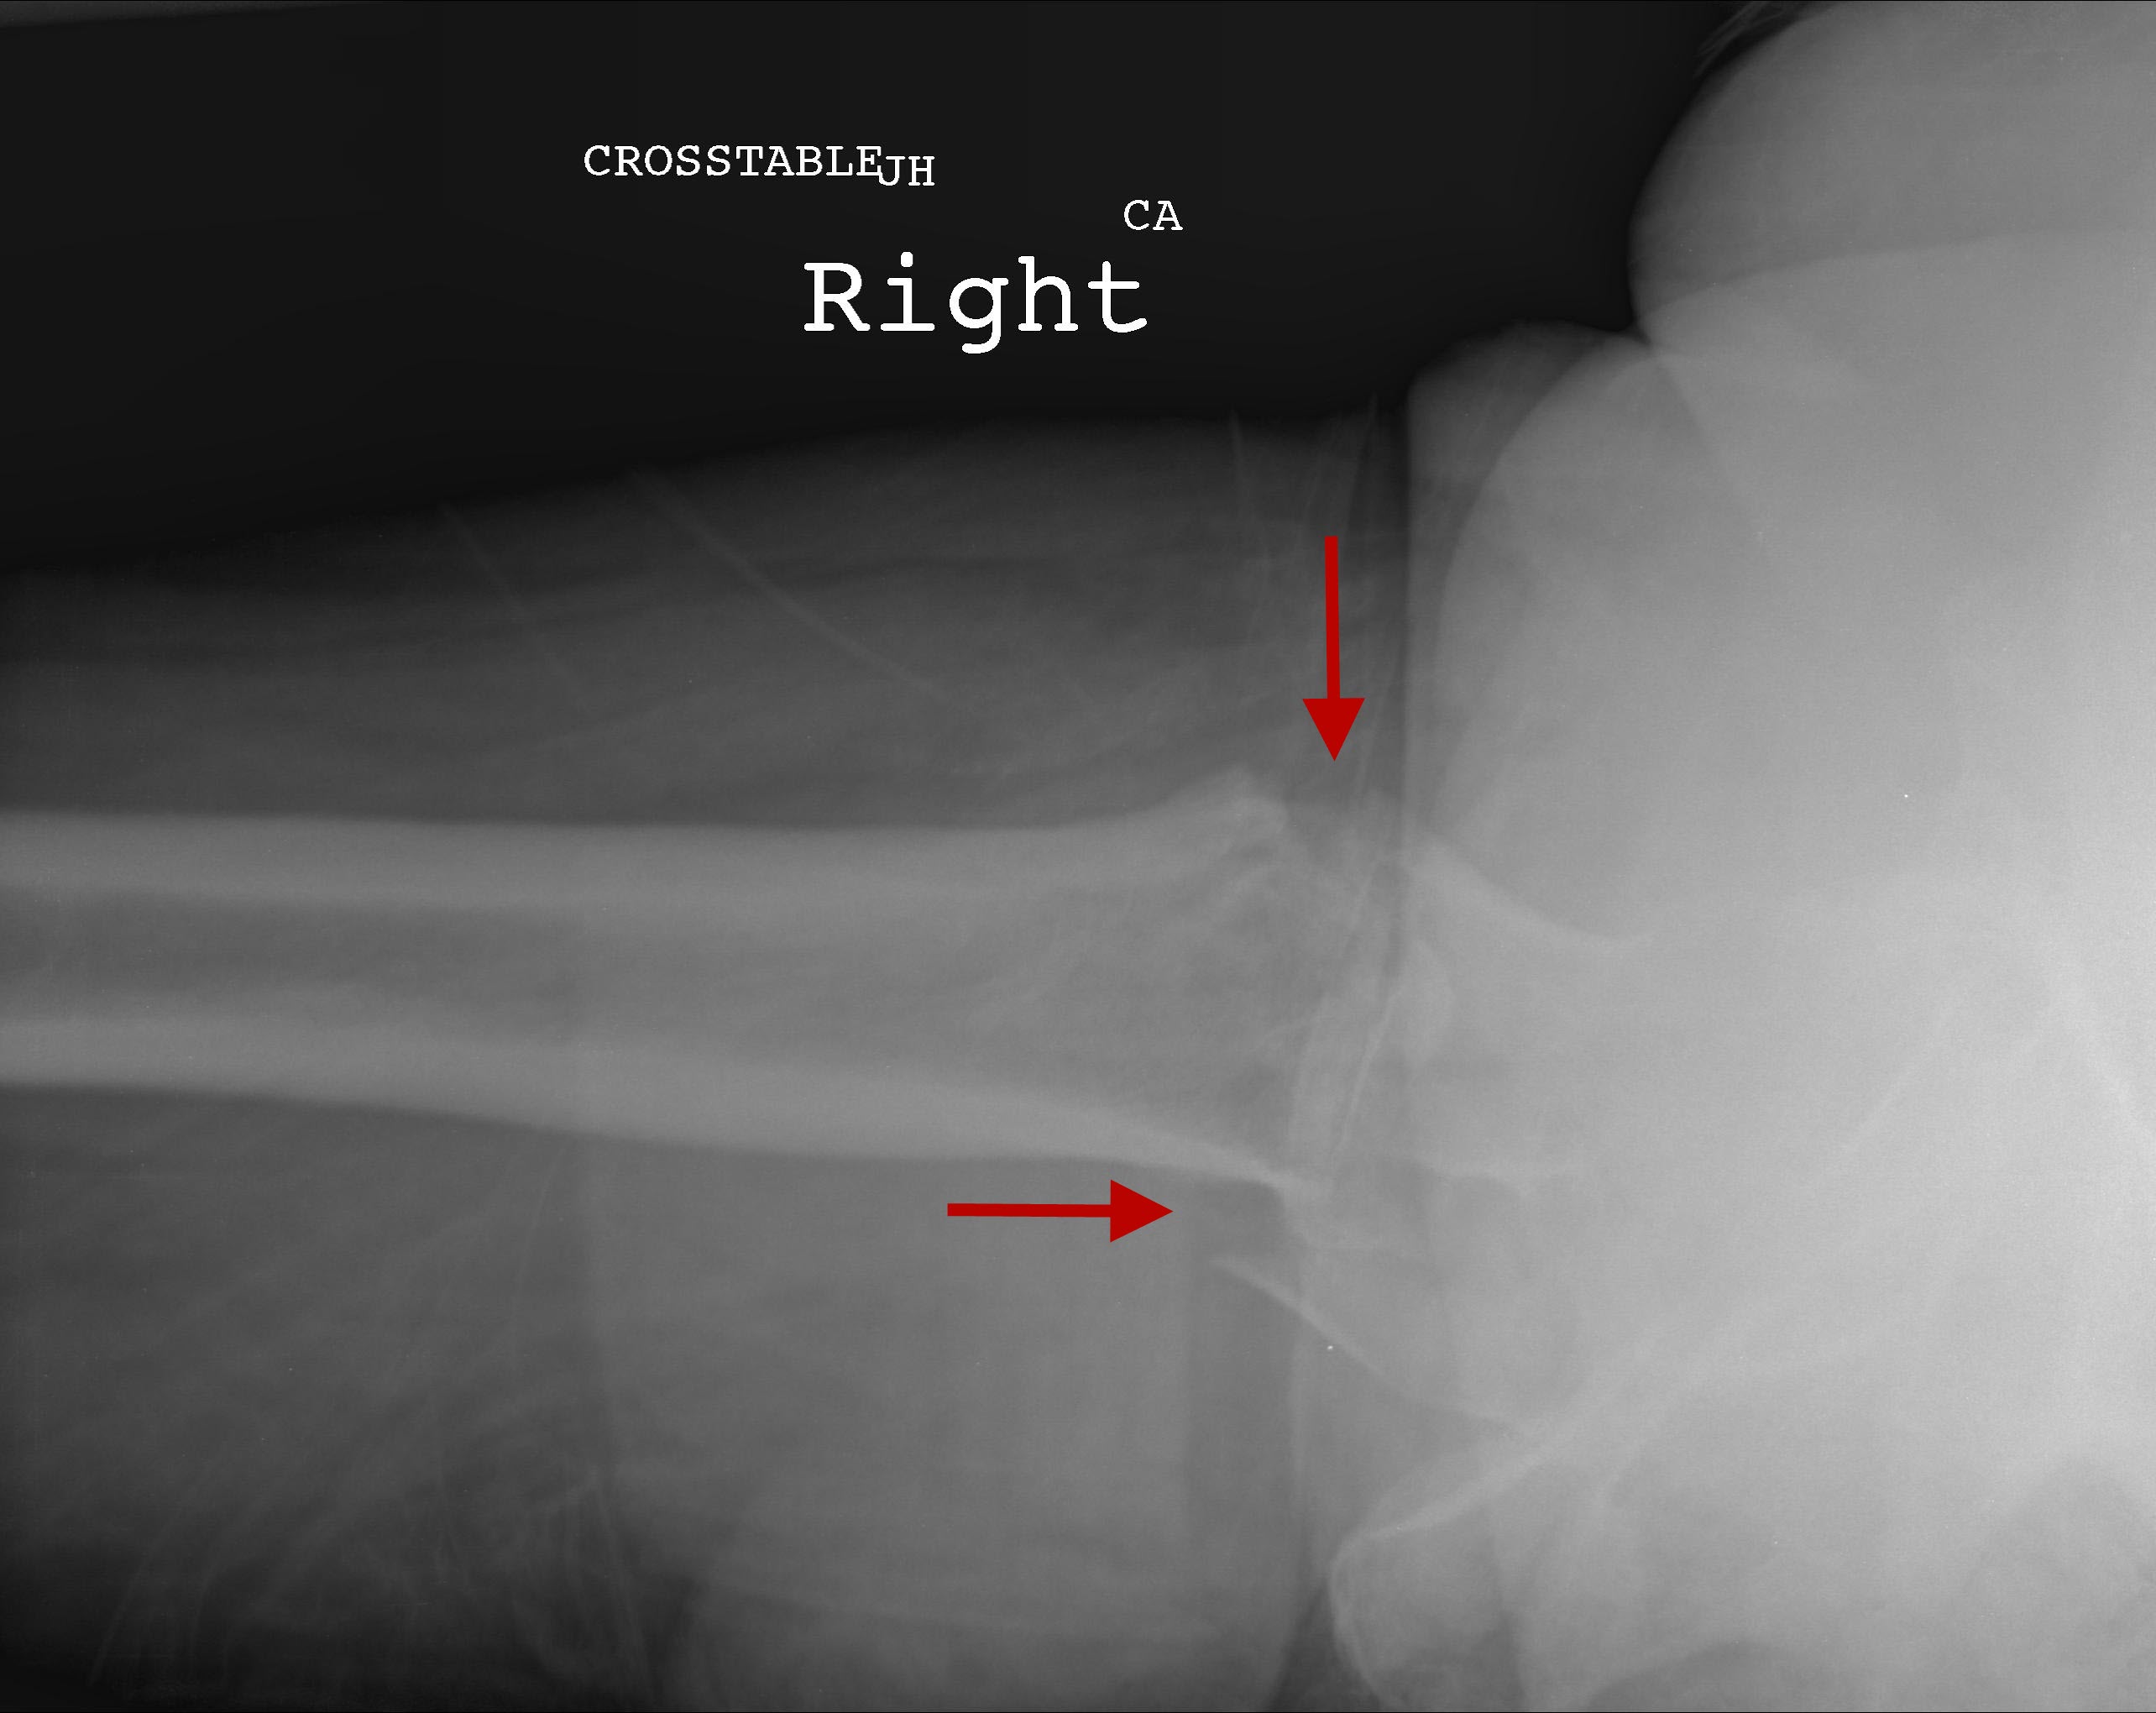 intertrochanteric fracture left hip icd 10